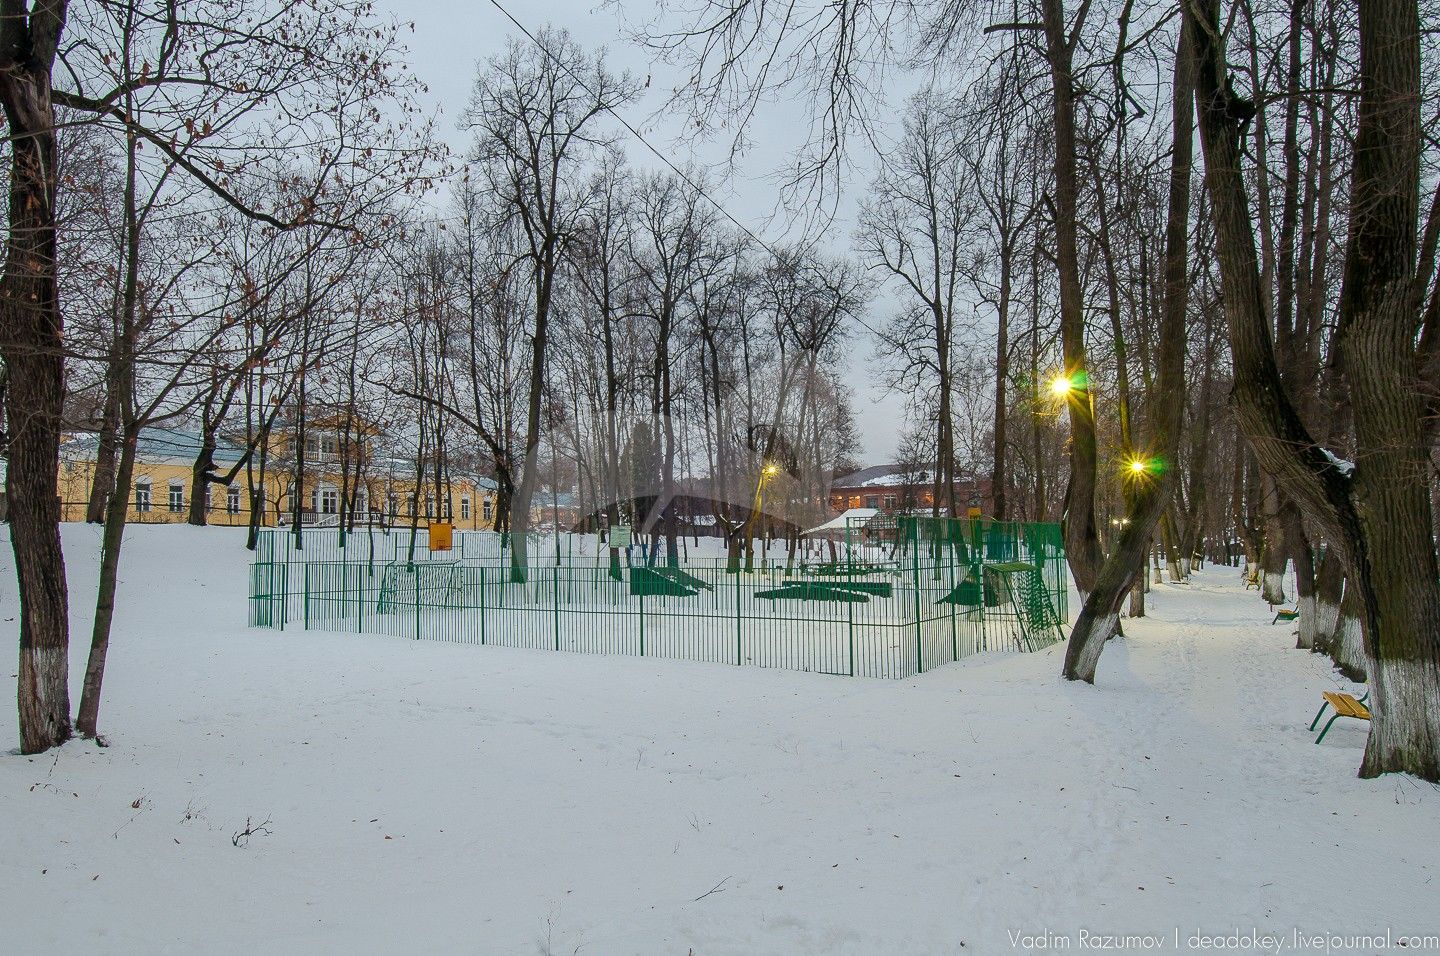 Парк, XVIII — XIX вв., усадьба «Фряново»